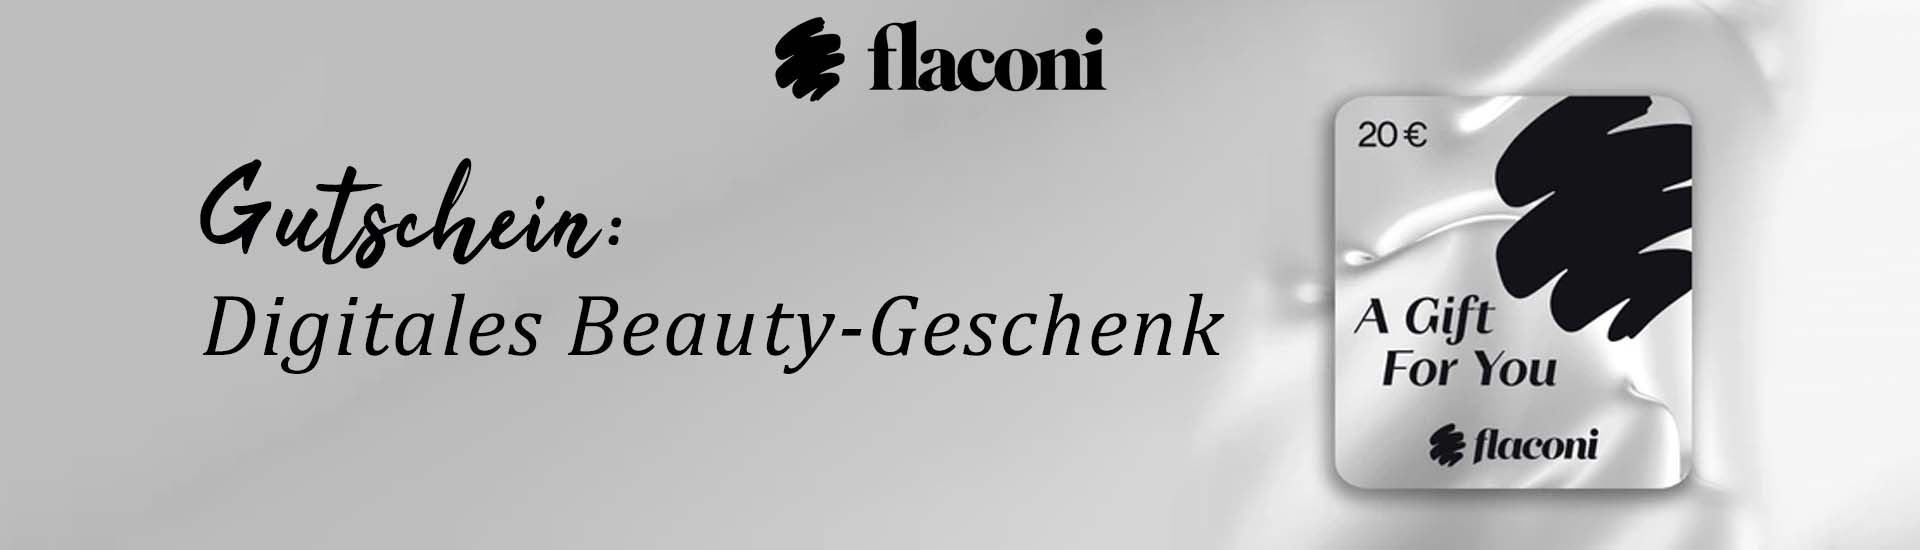 flaconi Gutschein: Digitales Beauty-Geschenk